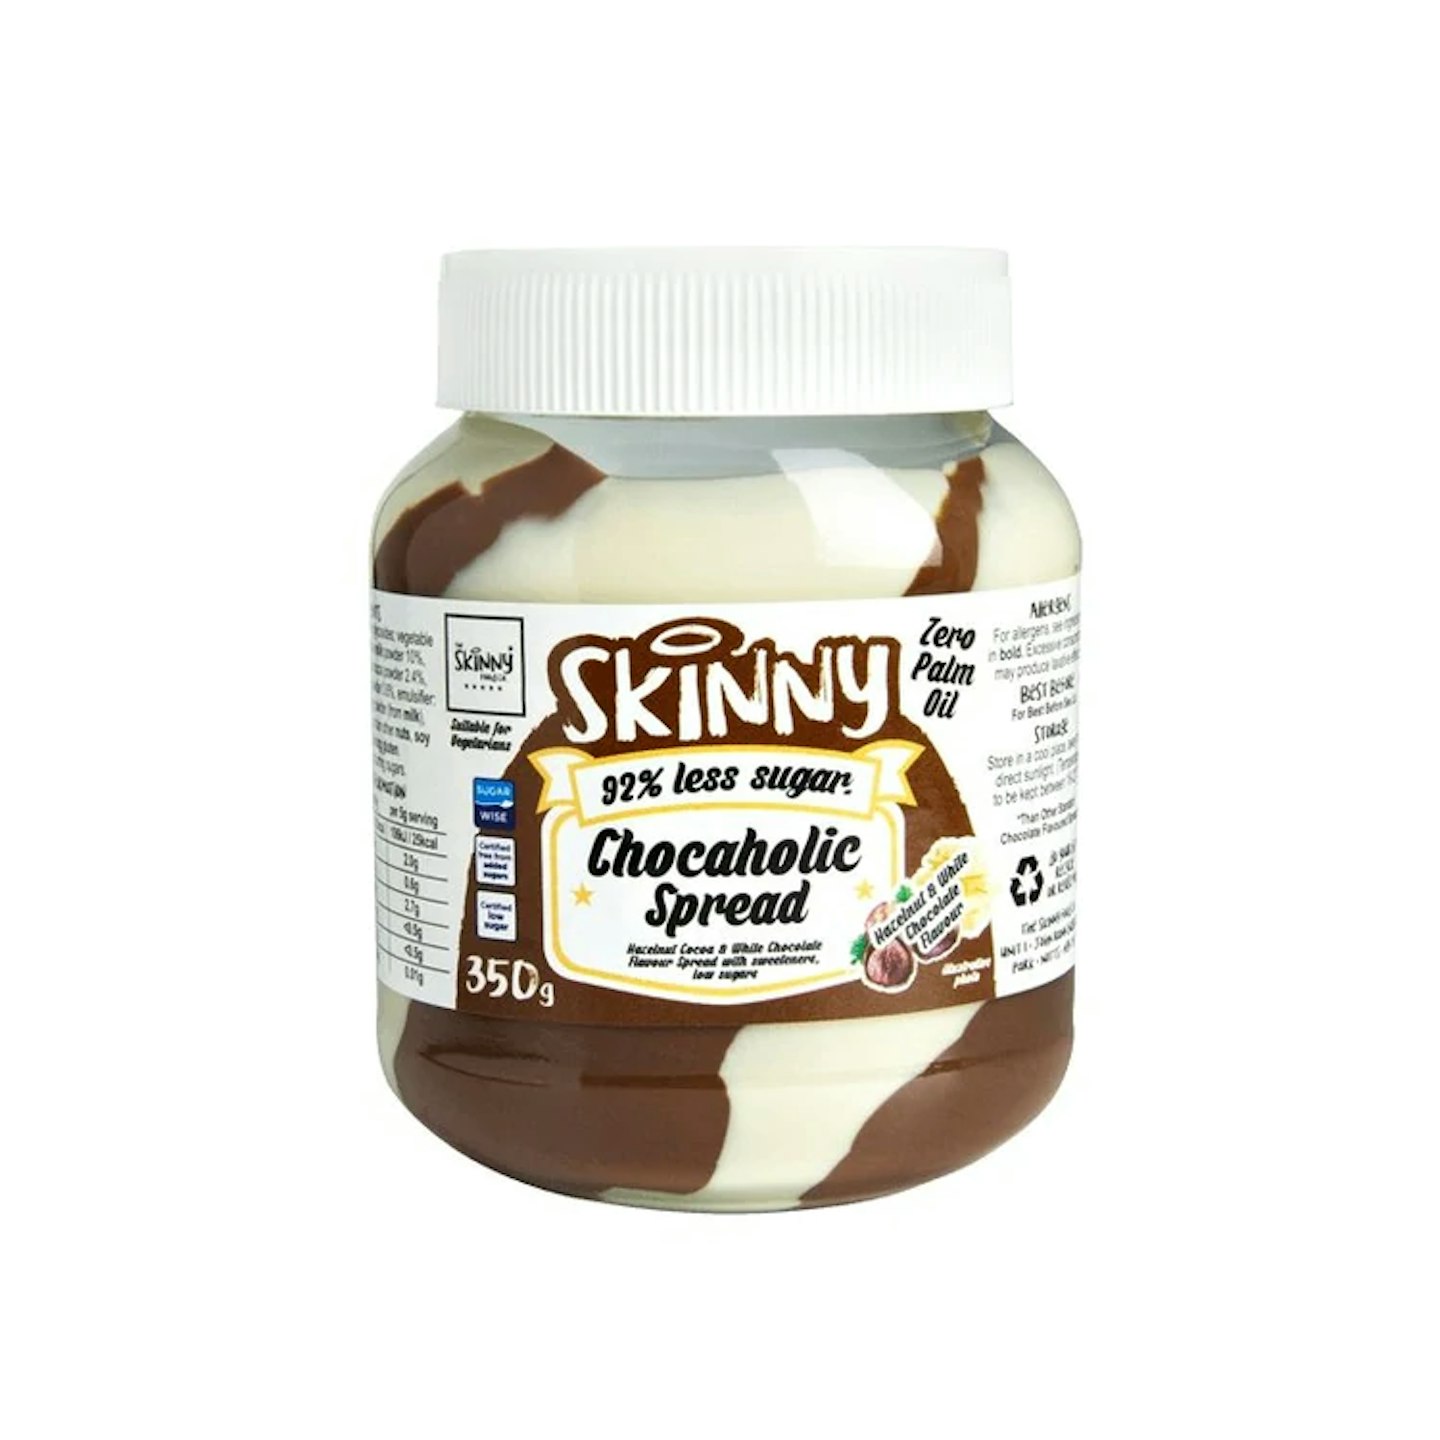 Skinny Low Sugar Chocaholic DUO Spread